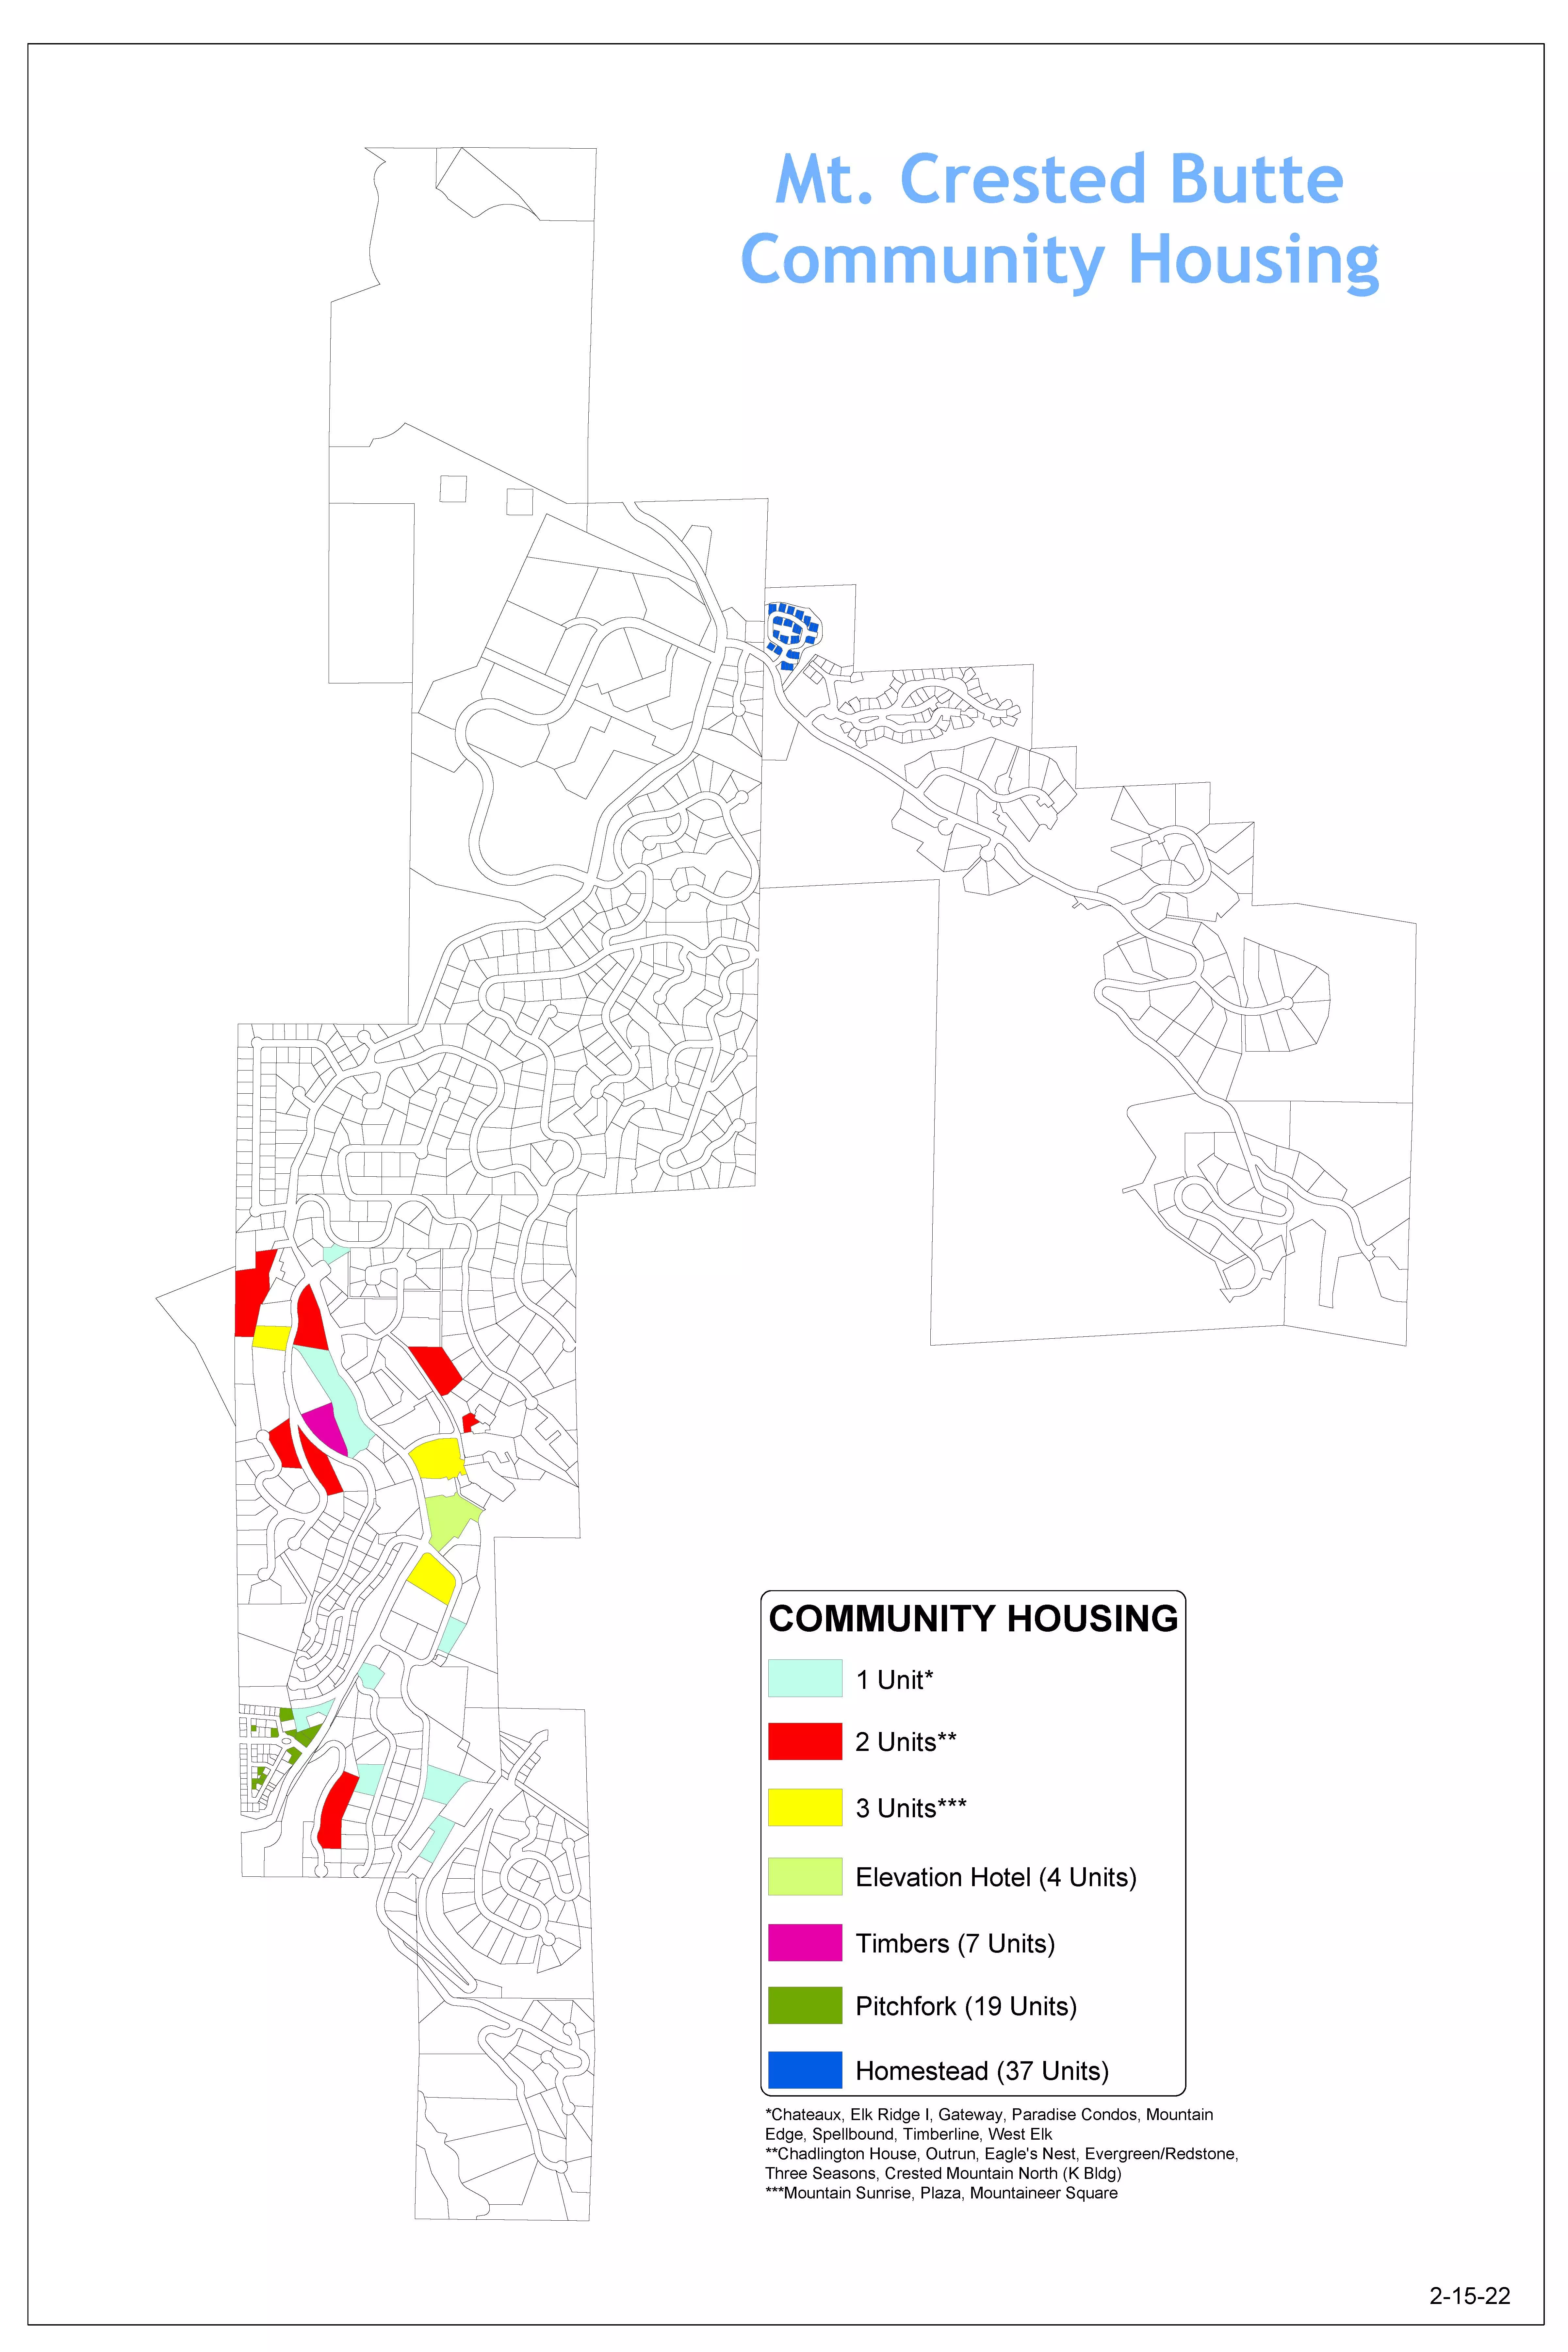 MTCB Community Housing Map